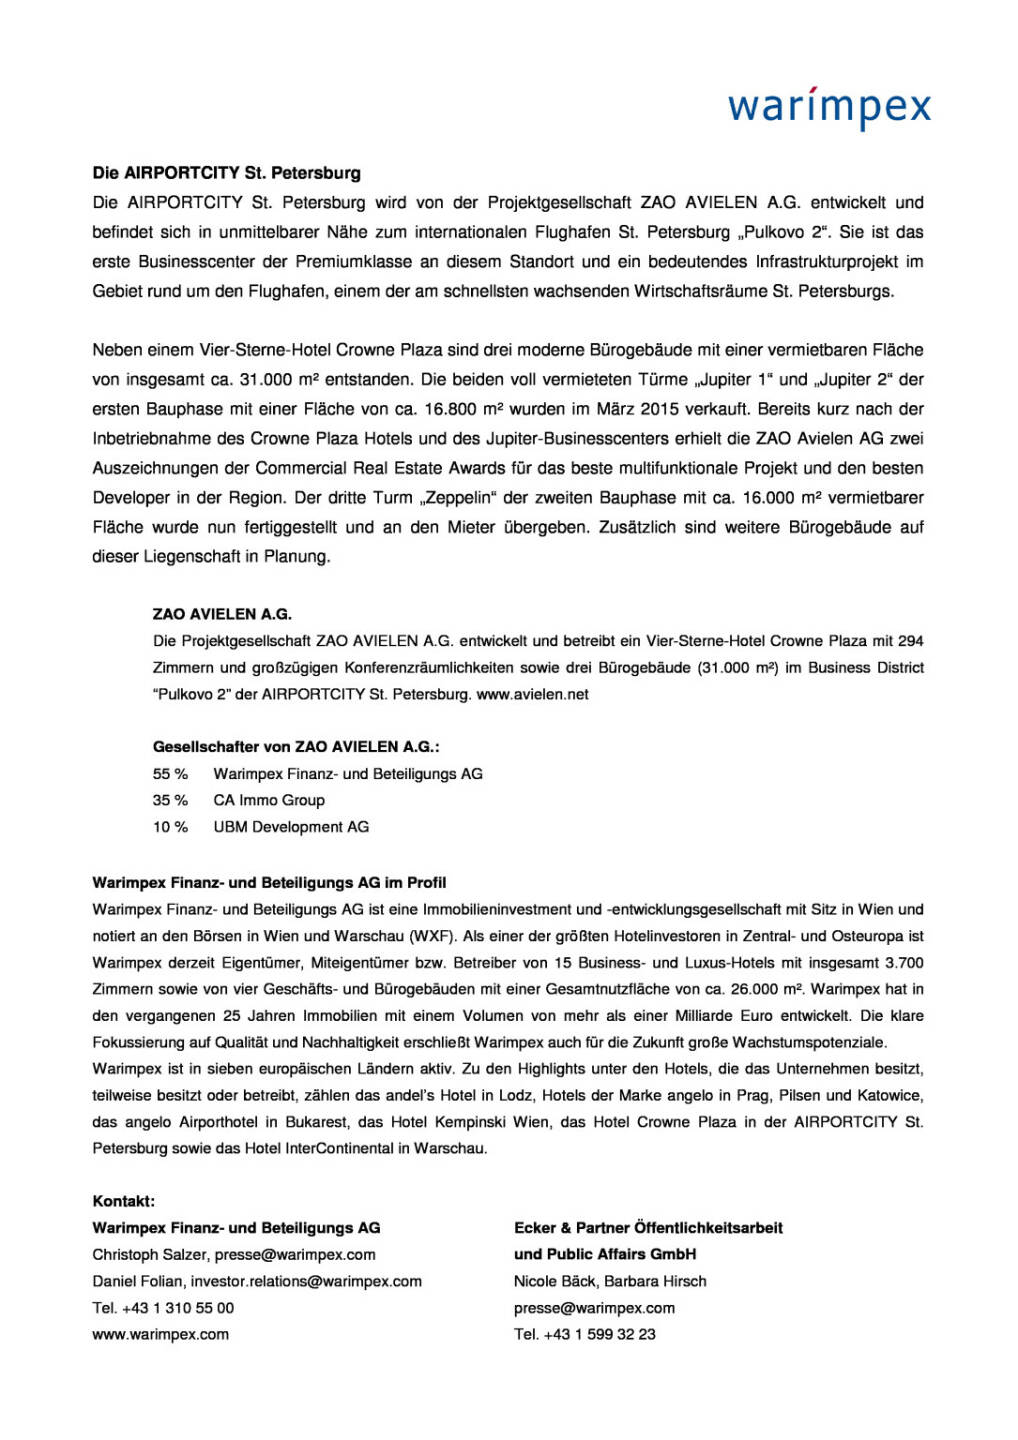 Warimpex: Mietereinzug in St. Petersburg und Budapest, Seite 2/2, komplettes Dokument unter http://boerse-social.com/static/uploads/file_494_warimpex_mietereinzug_in_st_petersburg_und_budapest.pdf